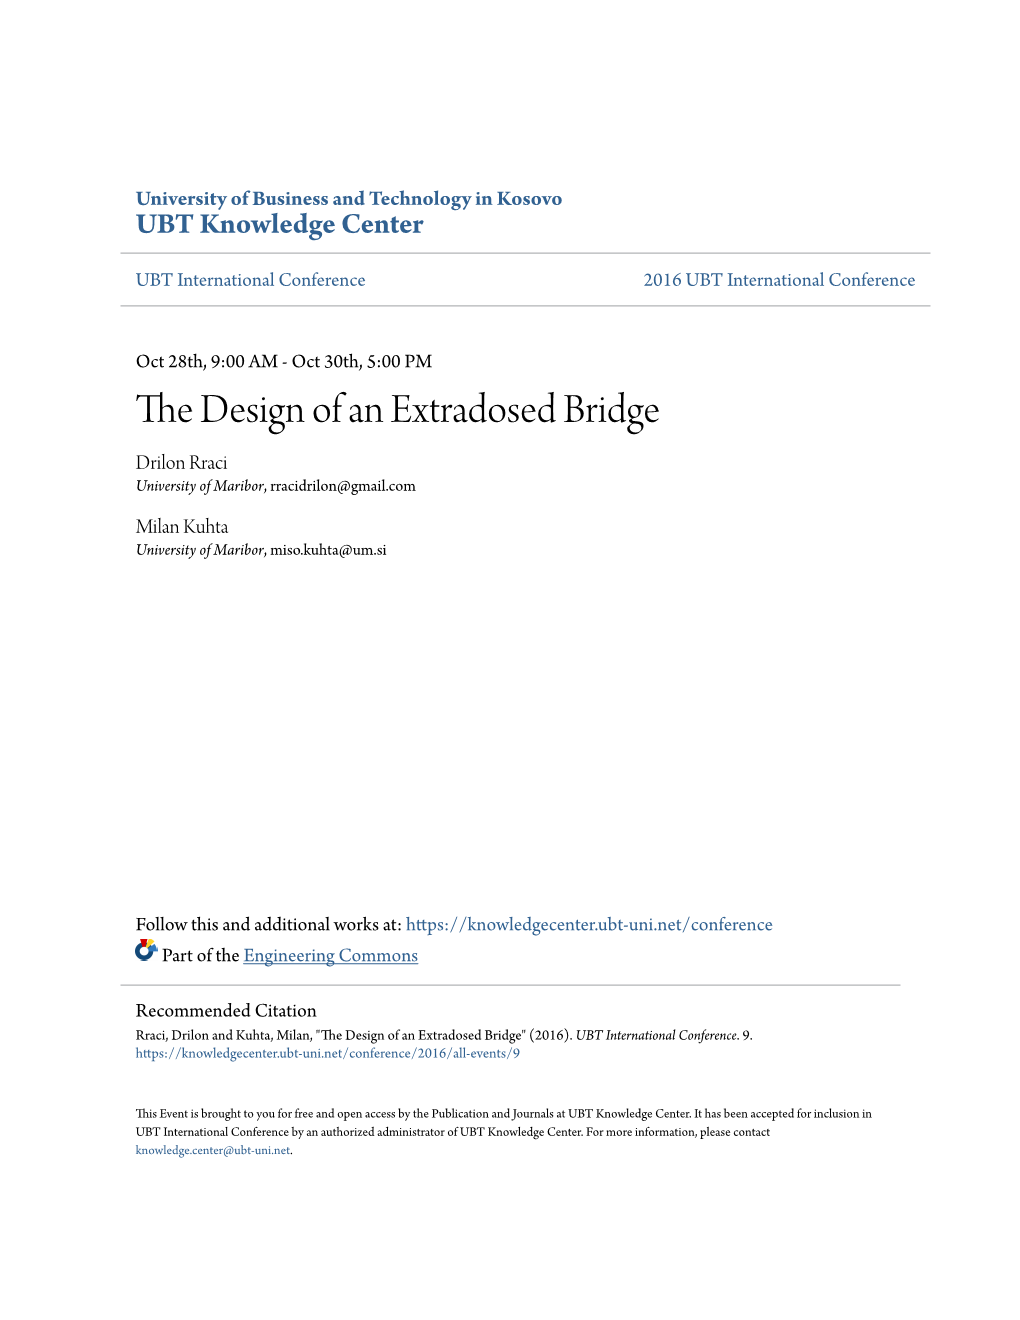 The Design of an Extradosed Bridge